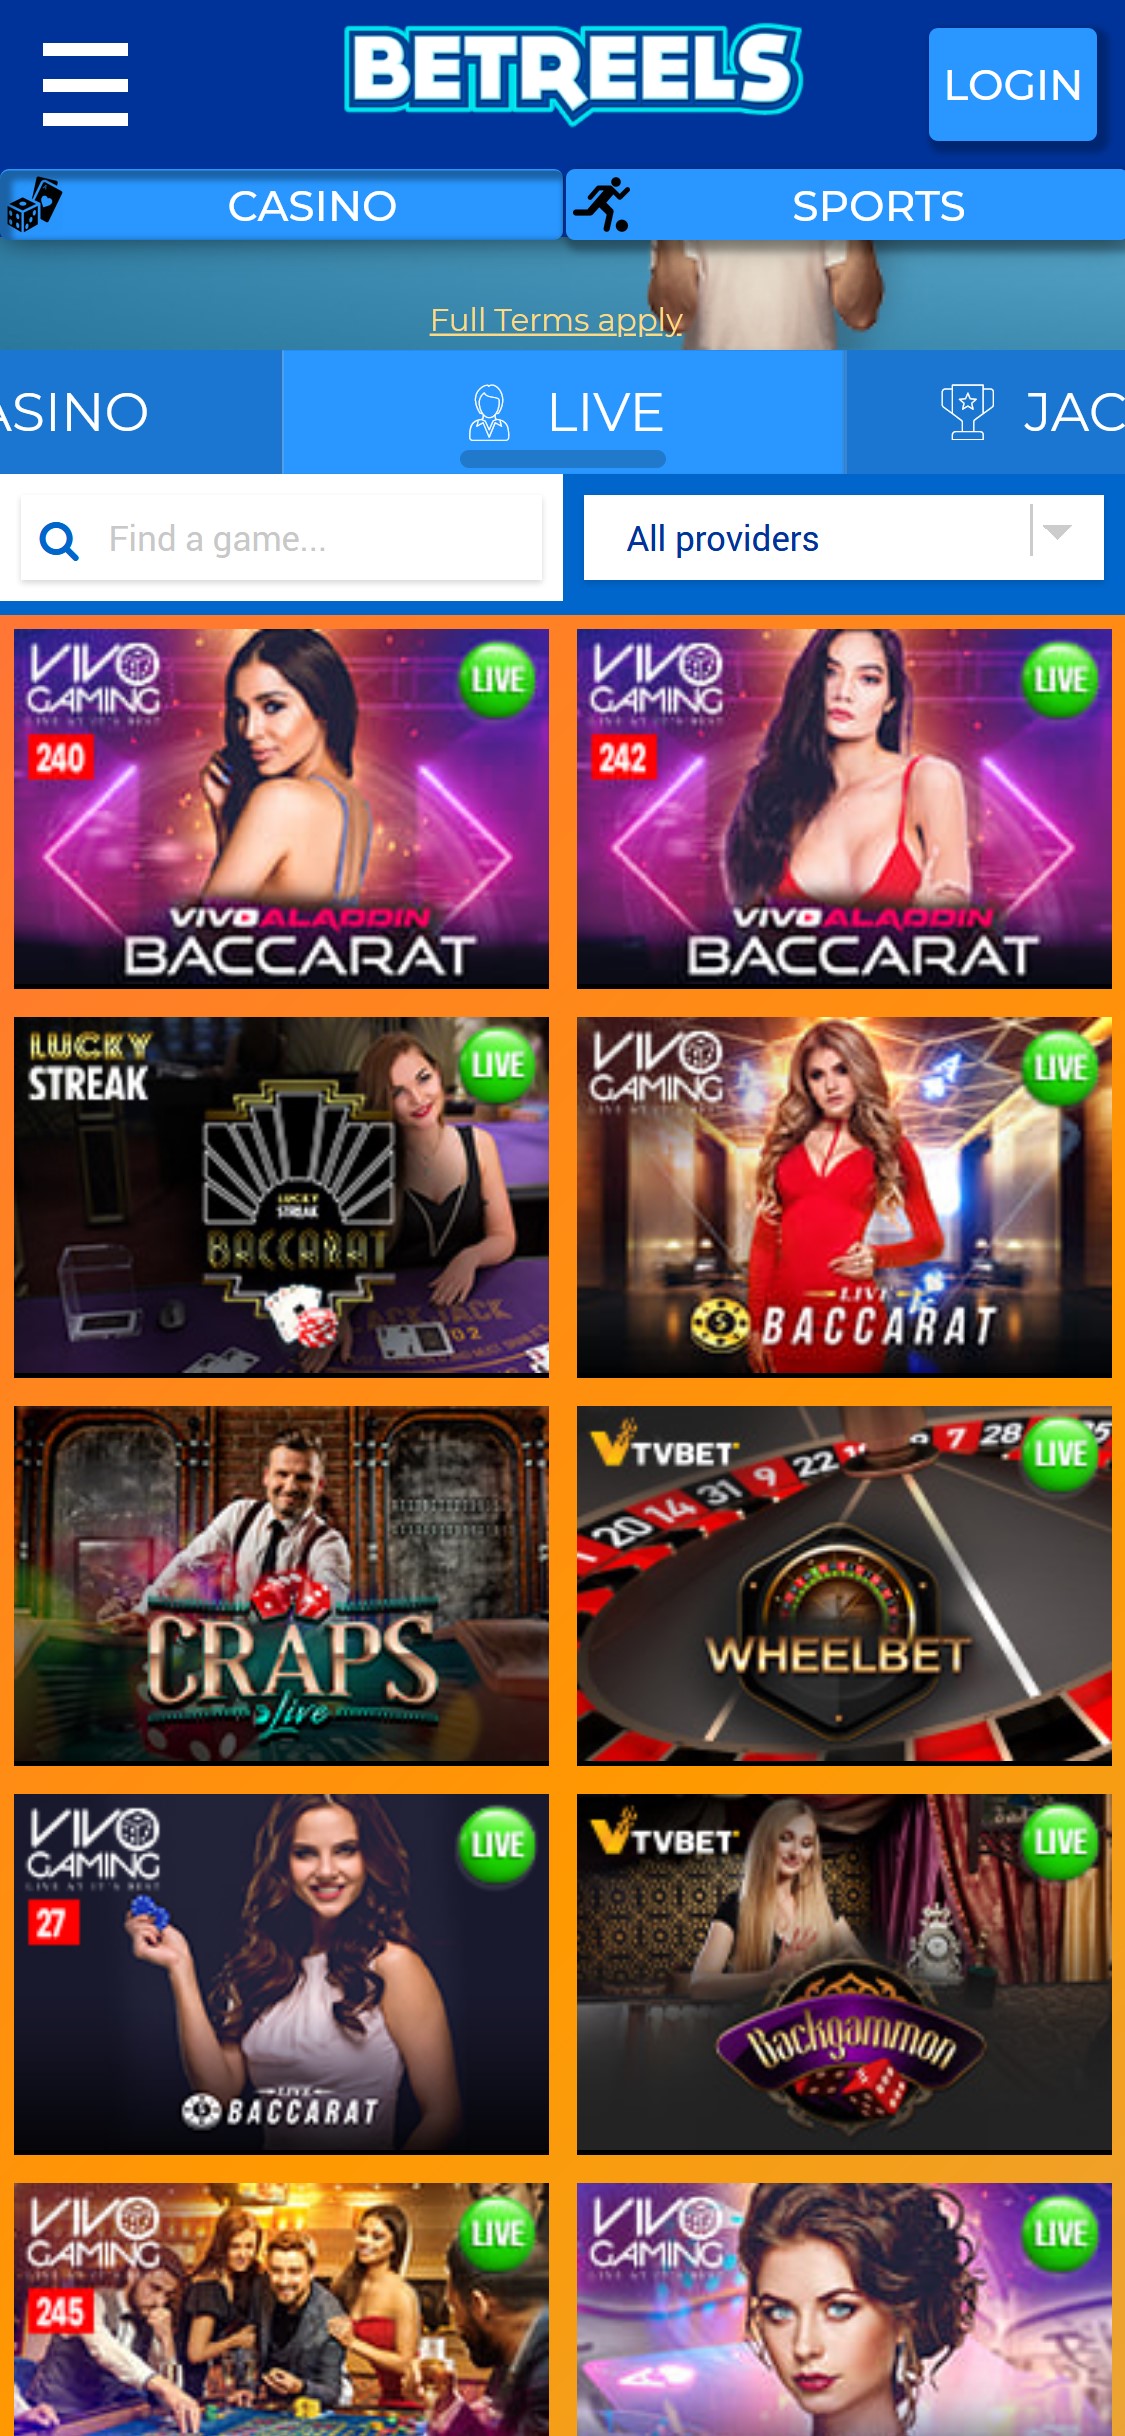 Betreels Casino Mobile Live Dealer Games Review